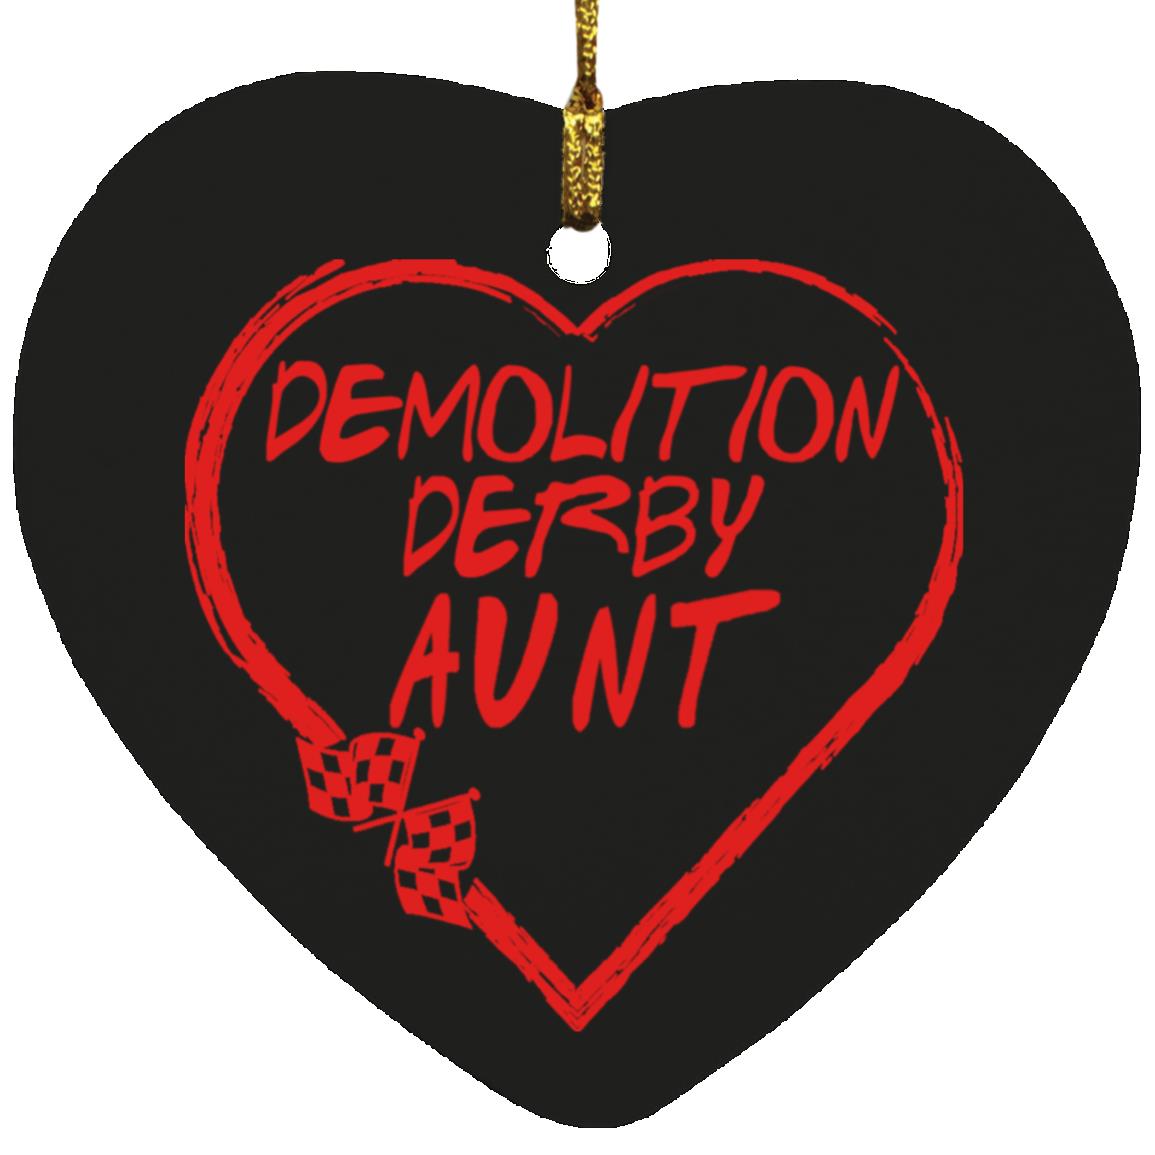 Demolition Derby Aunt Heart Ornament